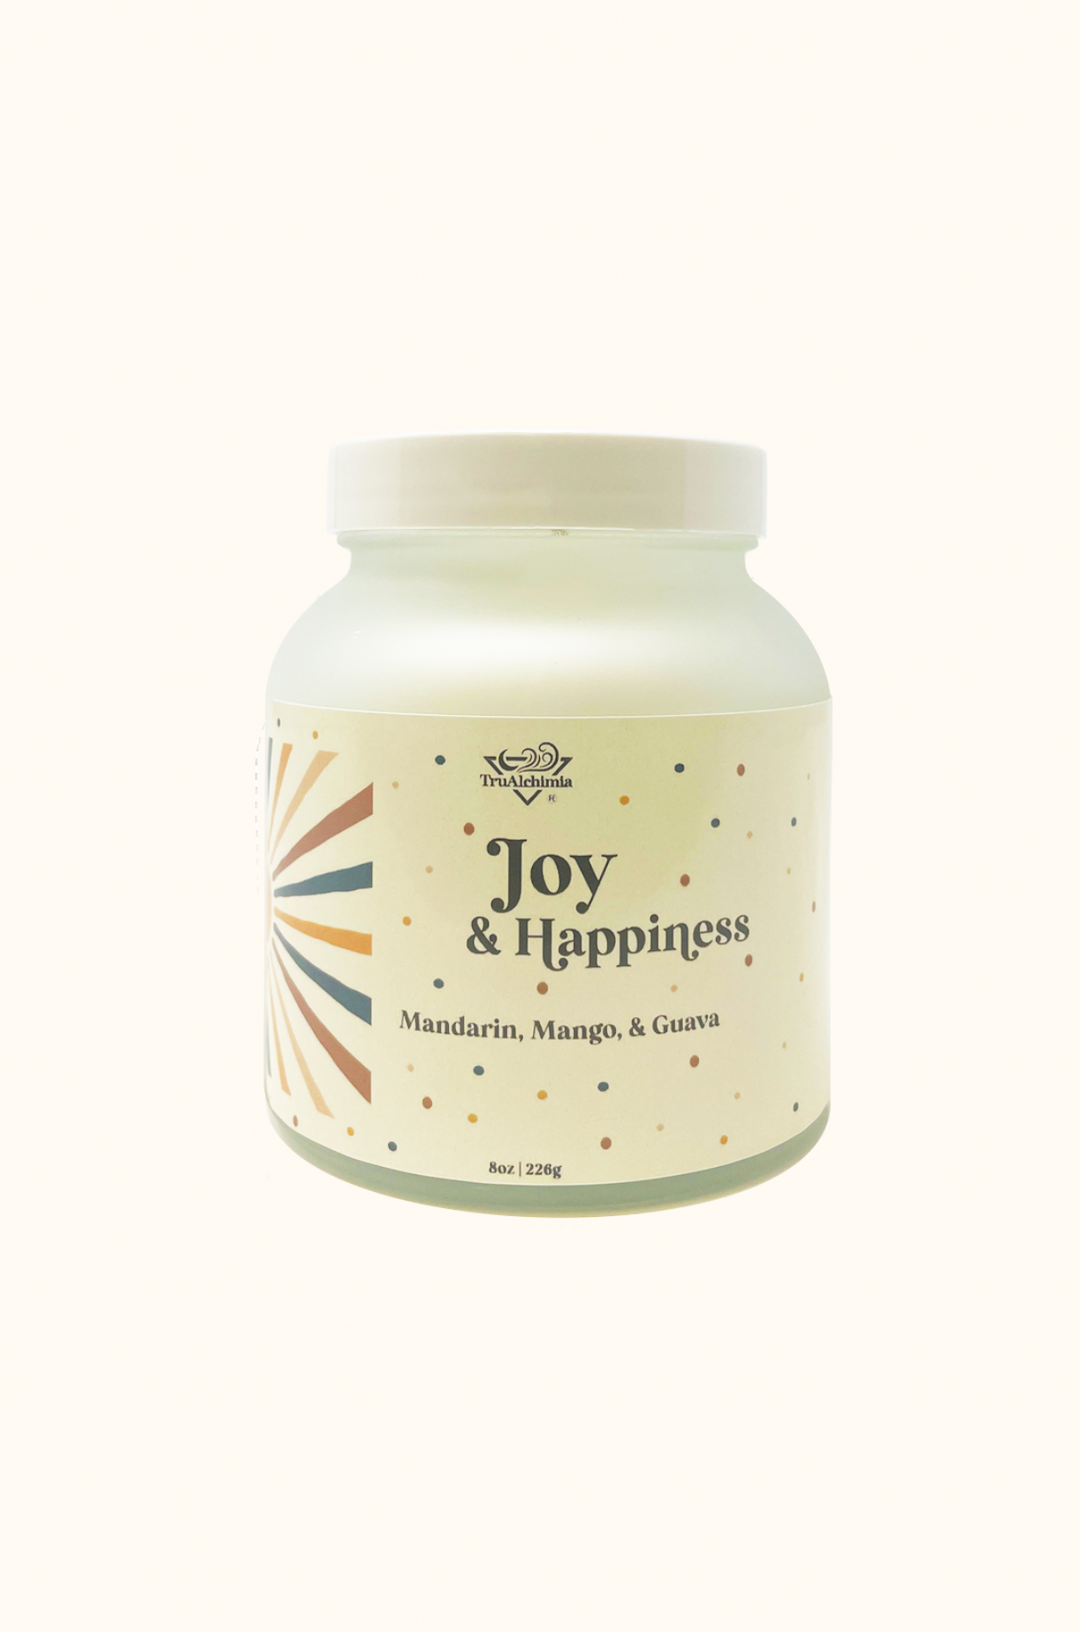 Joy & Happiness Candle